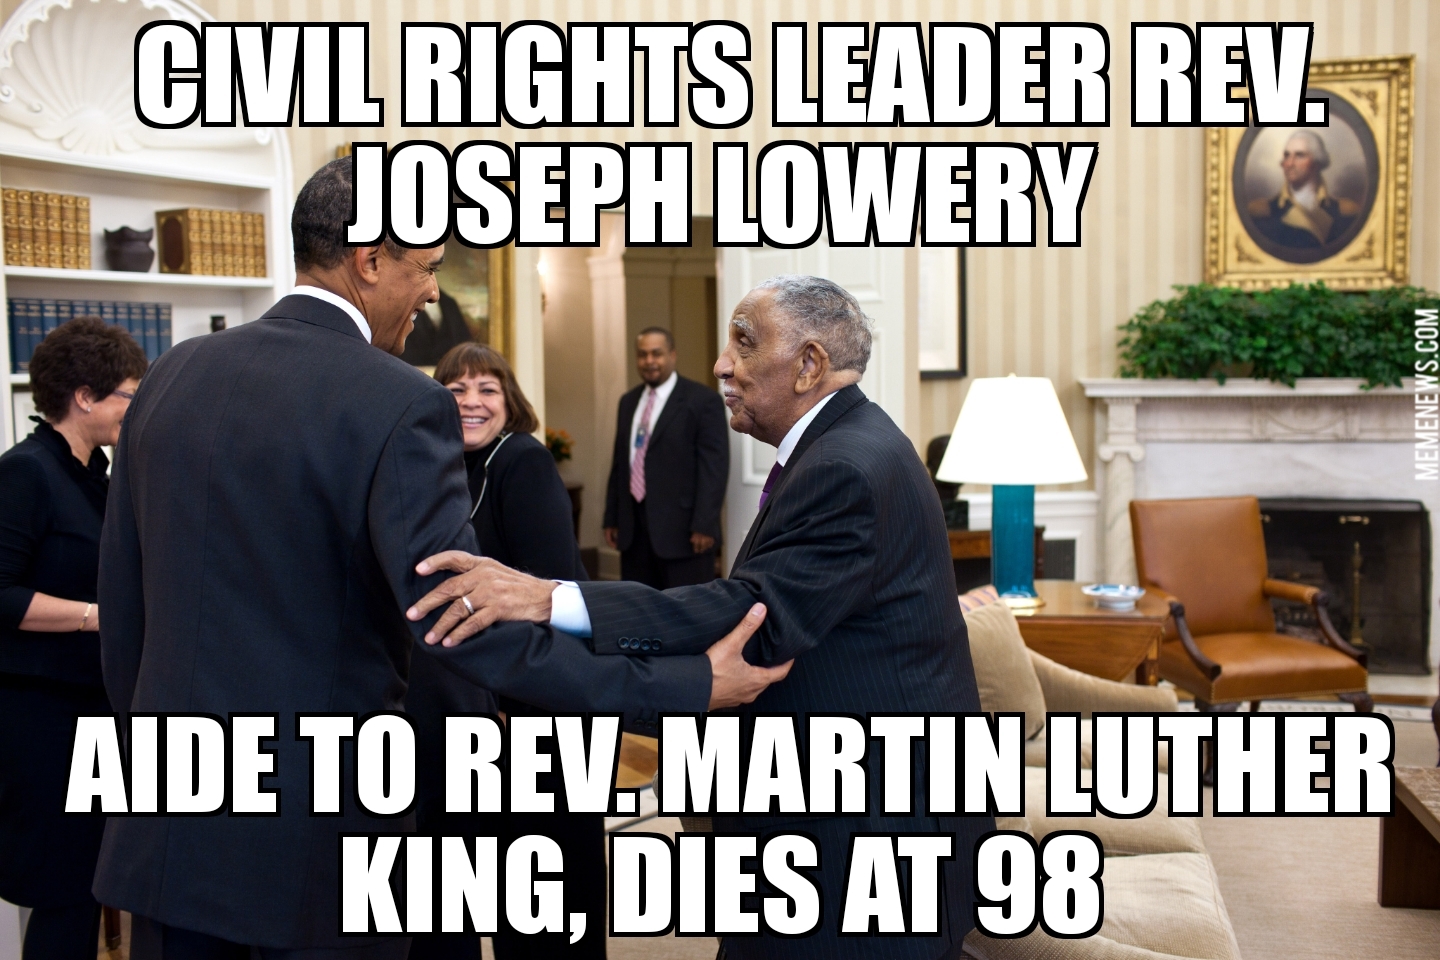 Rev. Joseph Lowery dies